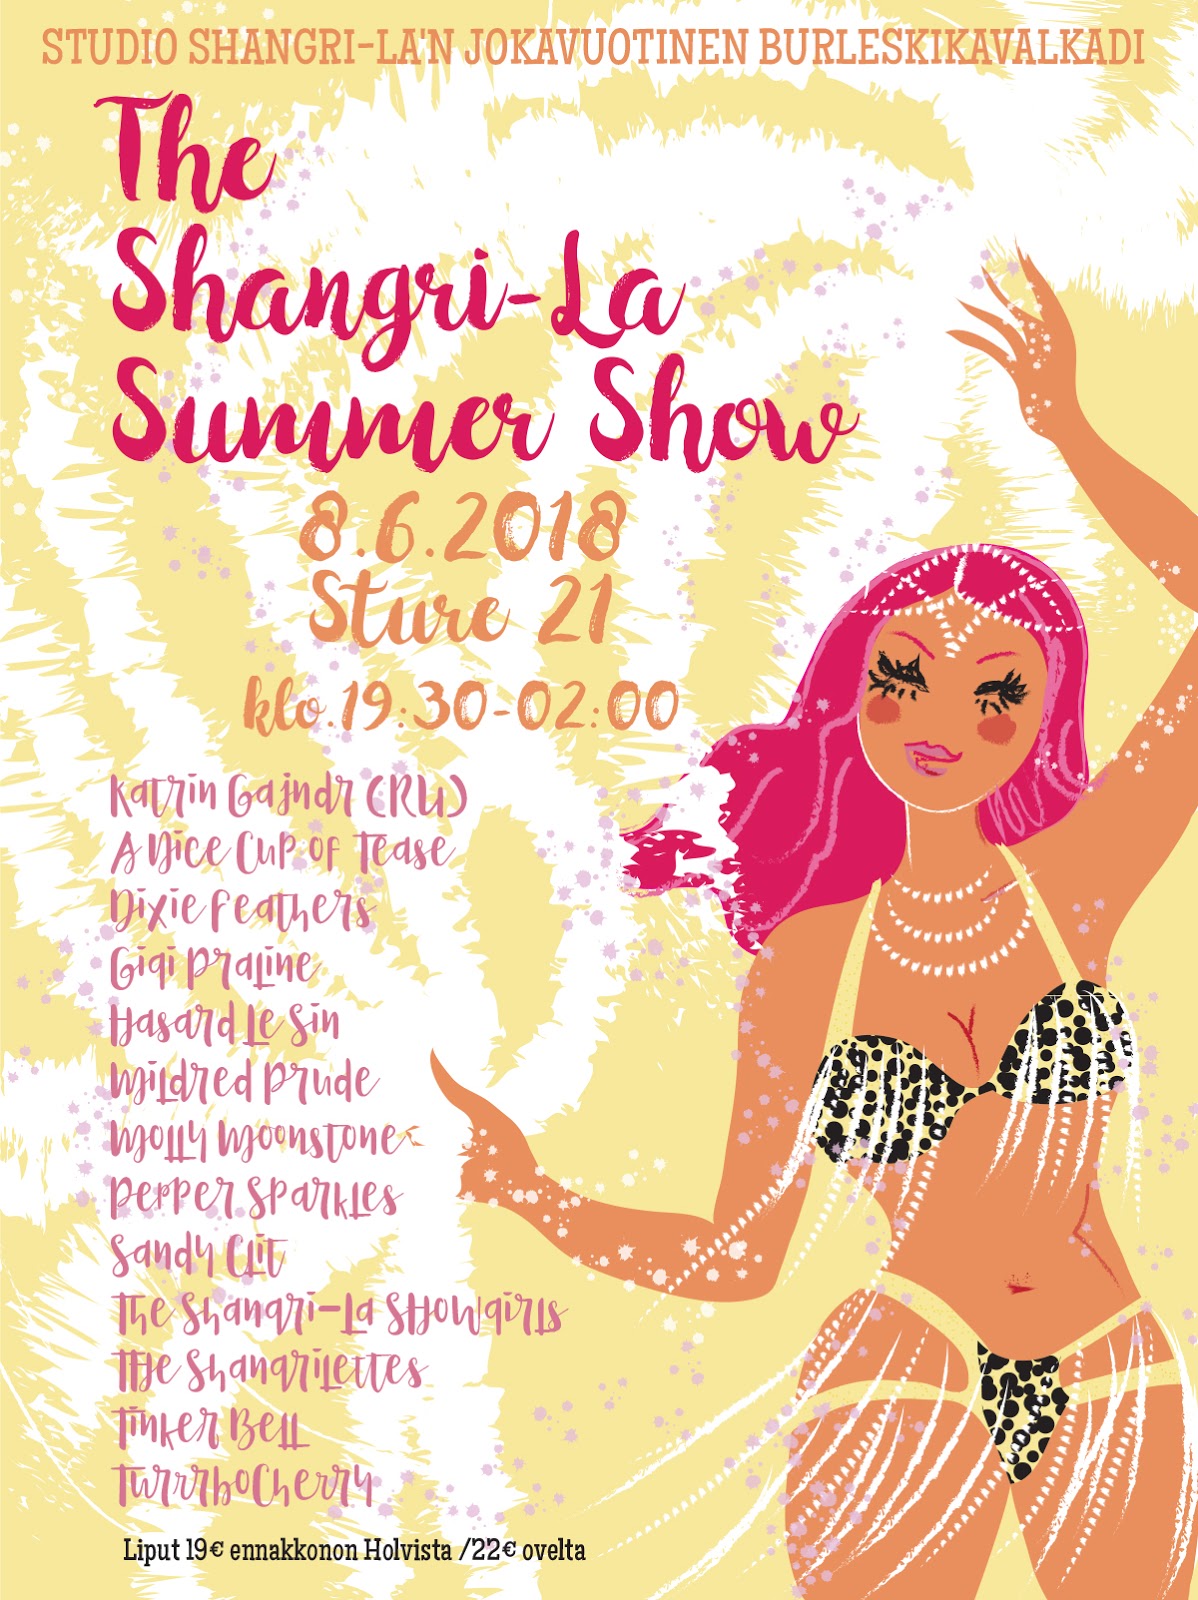 SUMMER CELEBRATIONS: THE SHANGRI-LA SUMMER SHOW JUNE 8!